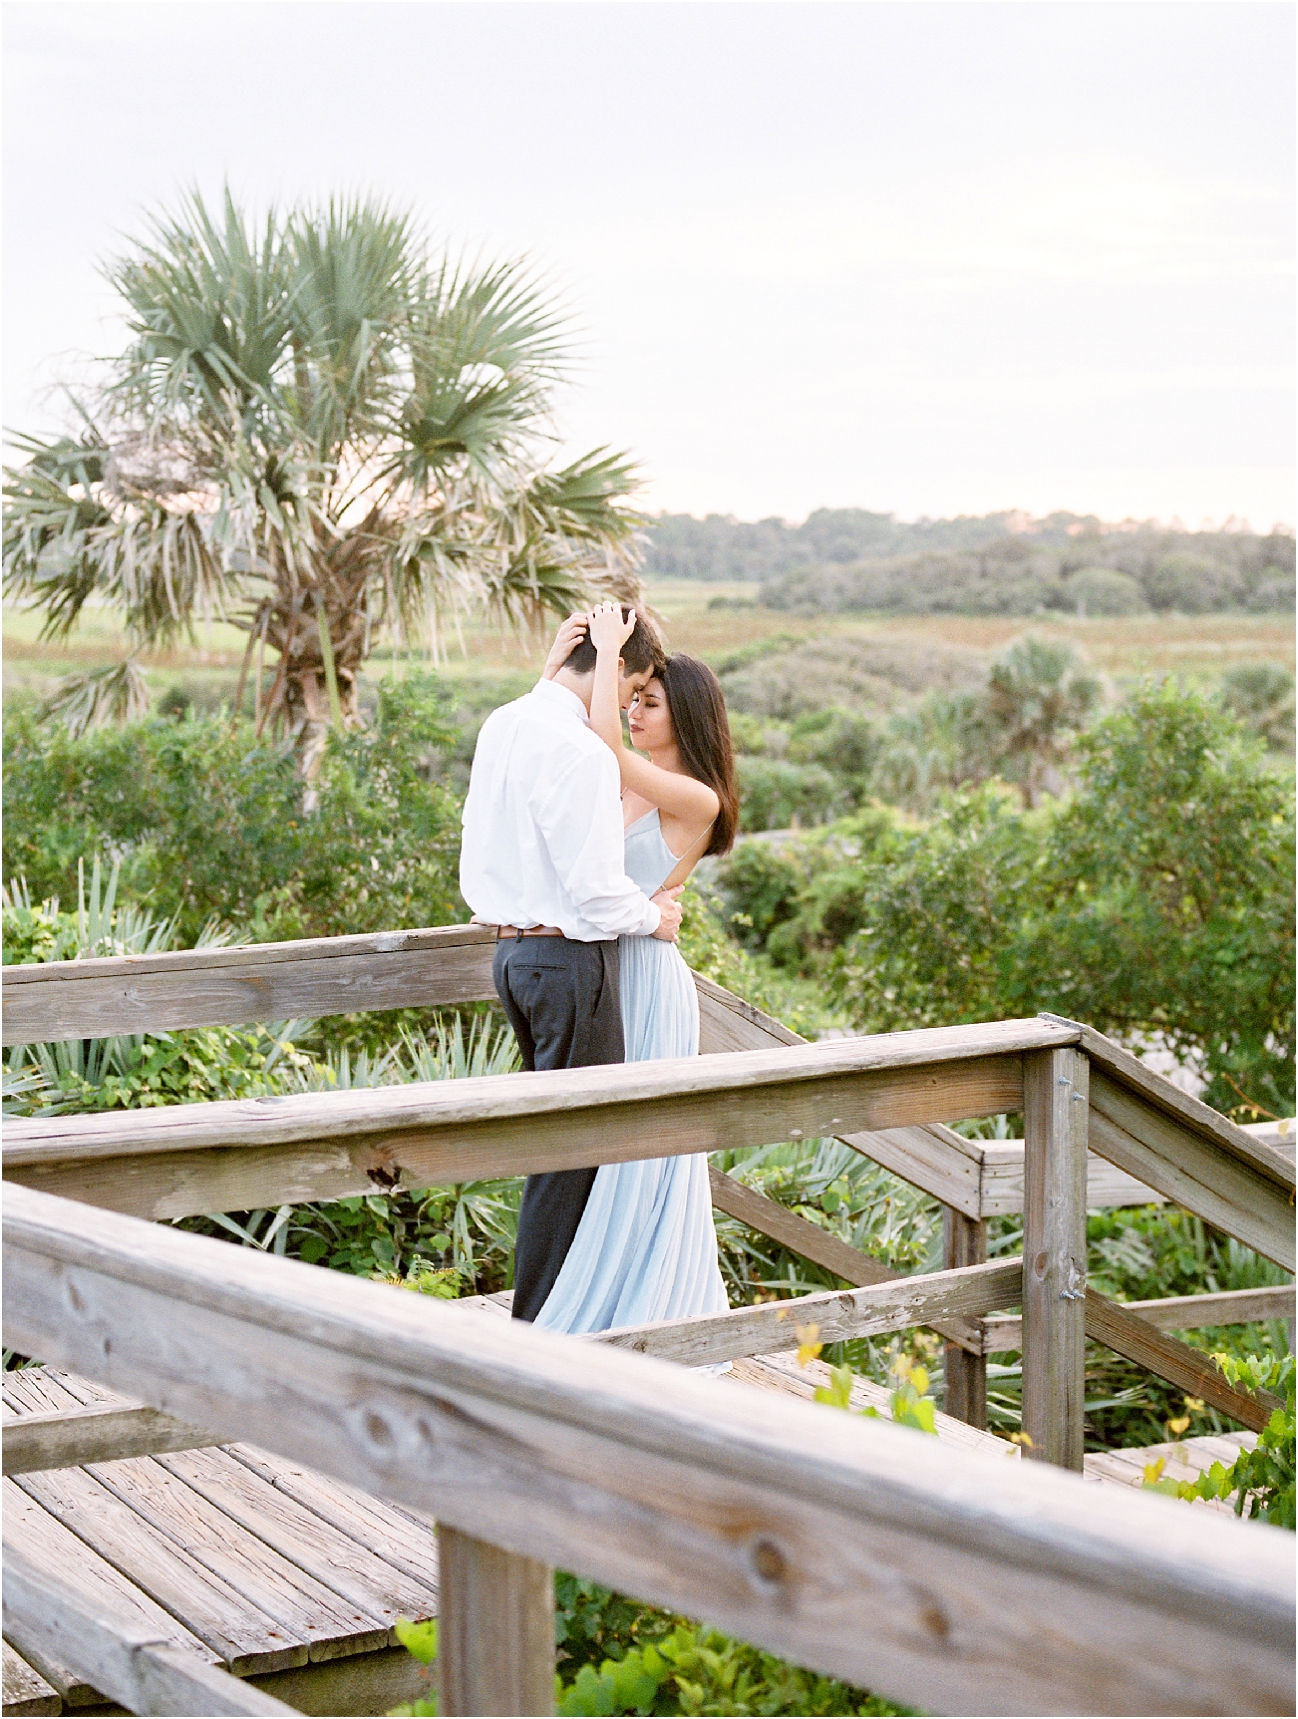 Lisa Silva Photography- Ponte Vedra Beach, St. Augustine and Jacksonville, Florida Fine Art Film Wedding Photography- Sunset Engagement Session at  Guana Beach State Park_0026.jpg